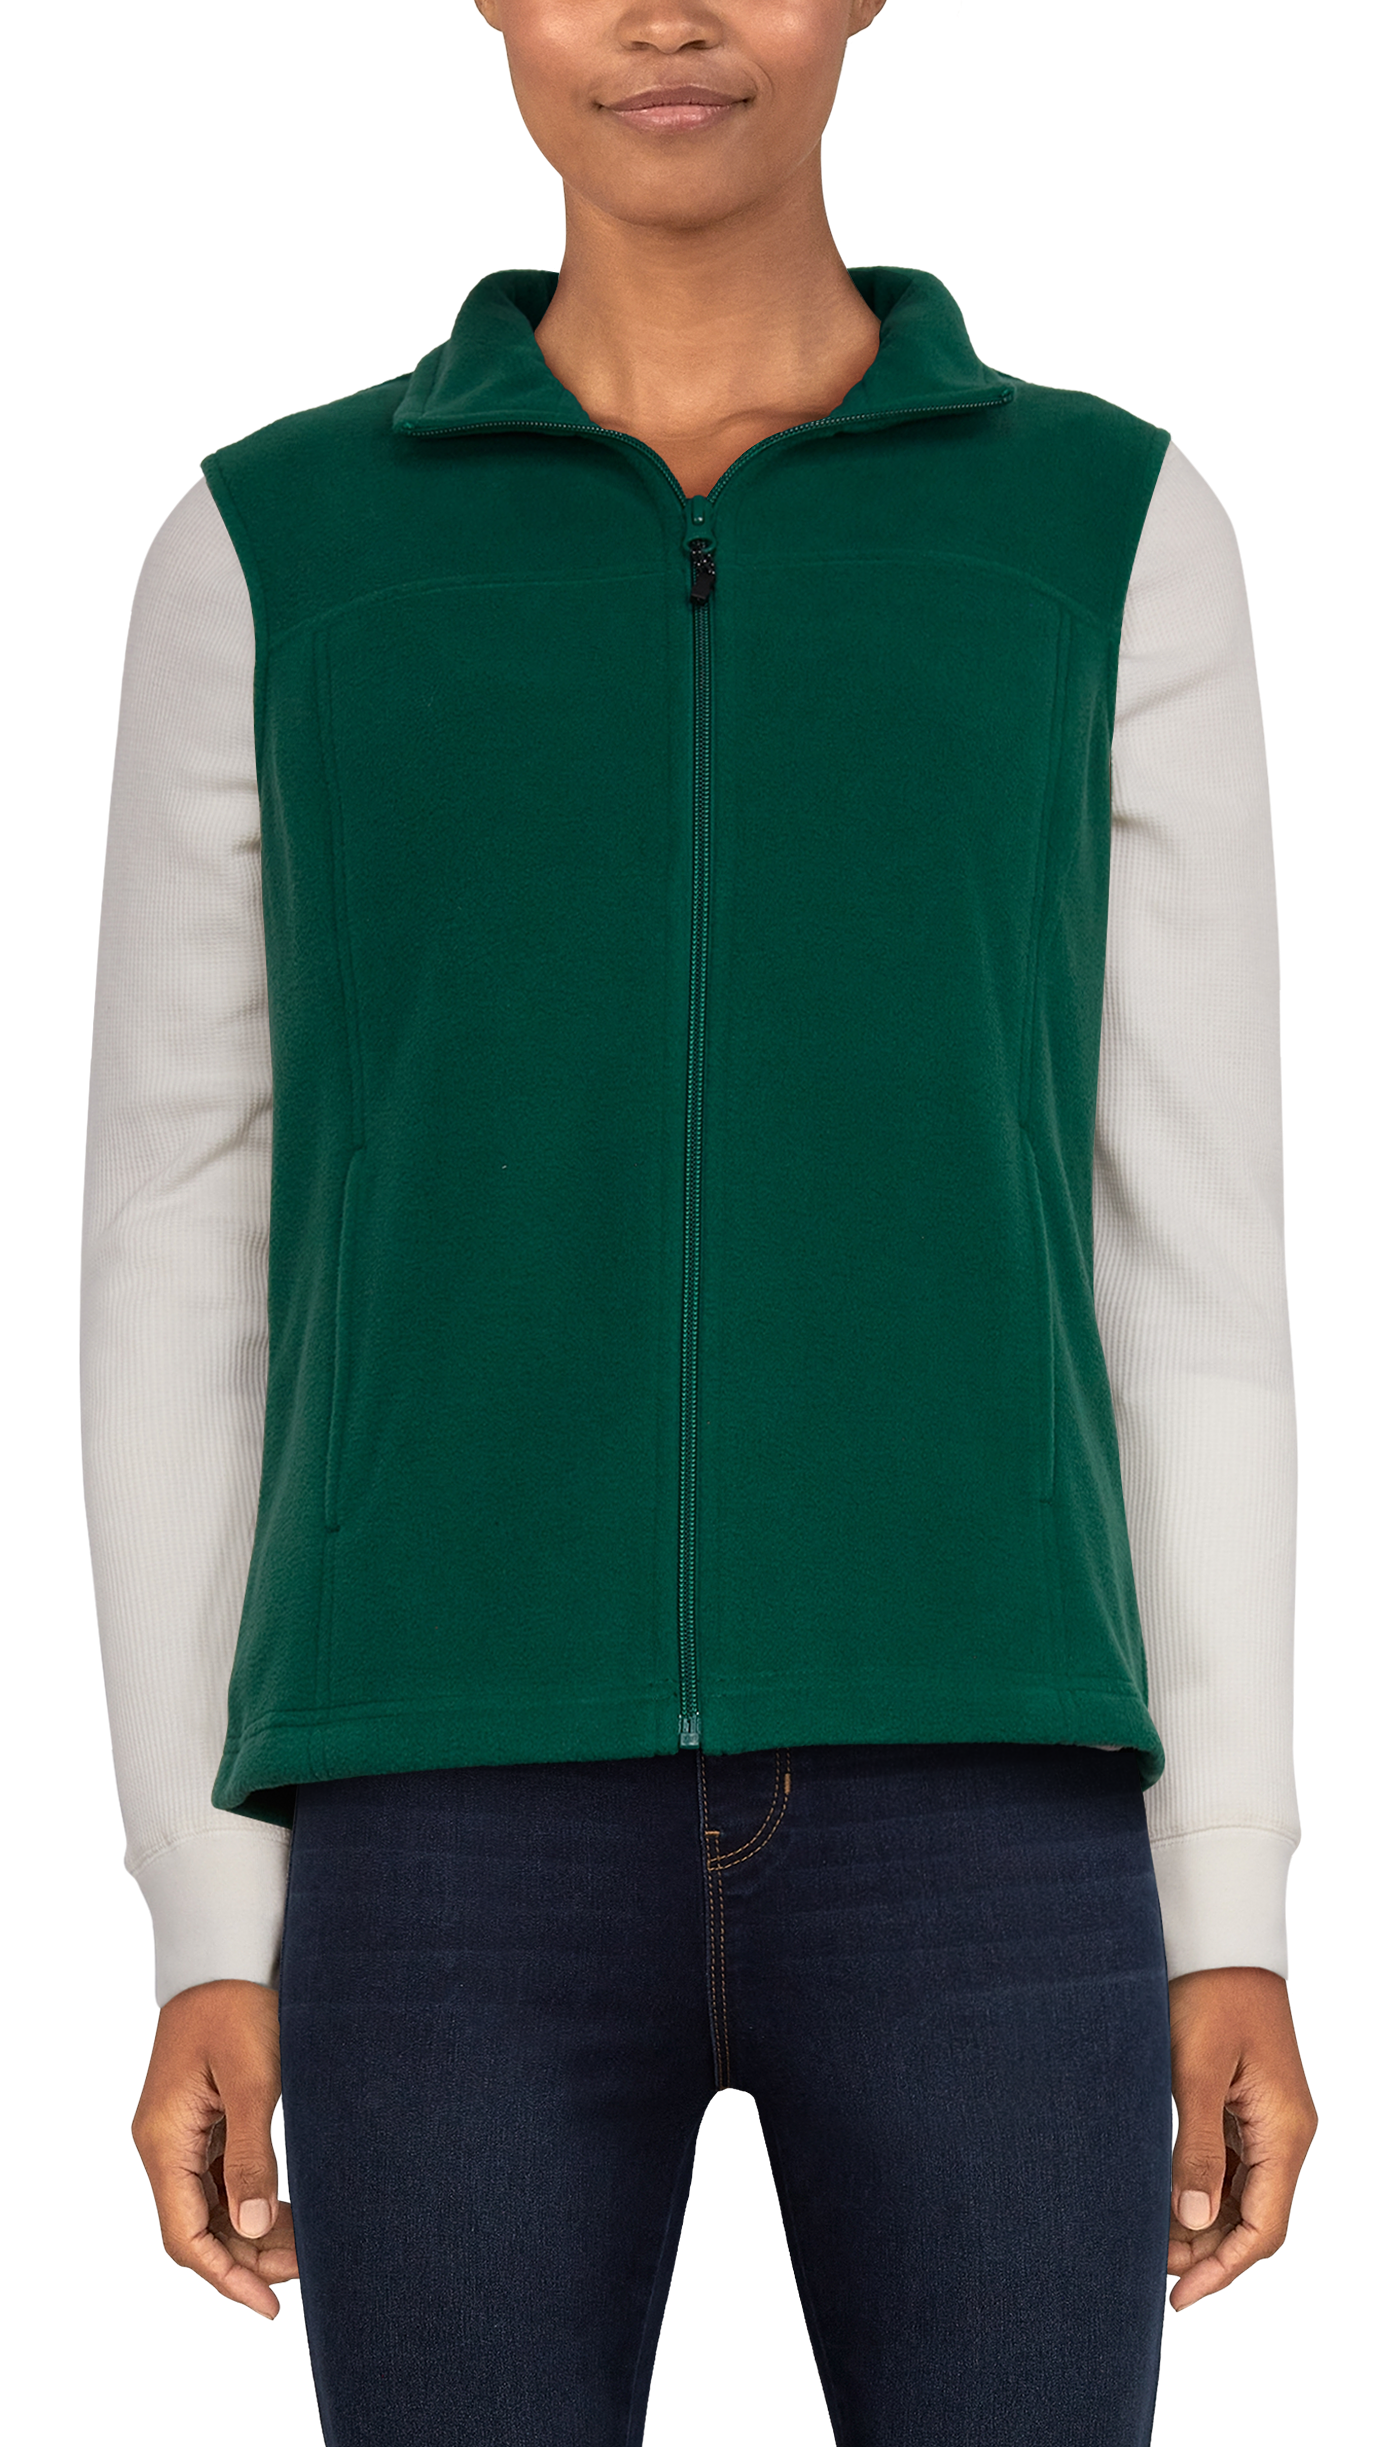 Natural Reflections Zip-Up Fleece Vest for Ladies - Evergreen - S product image